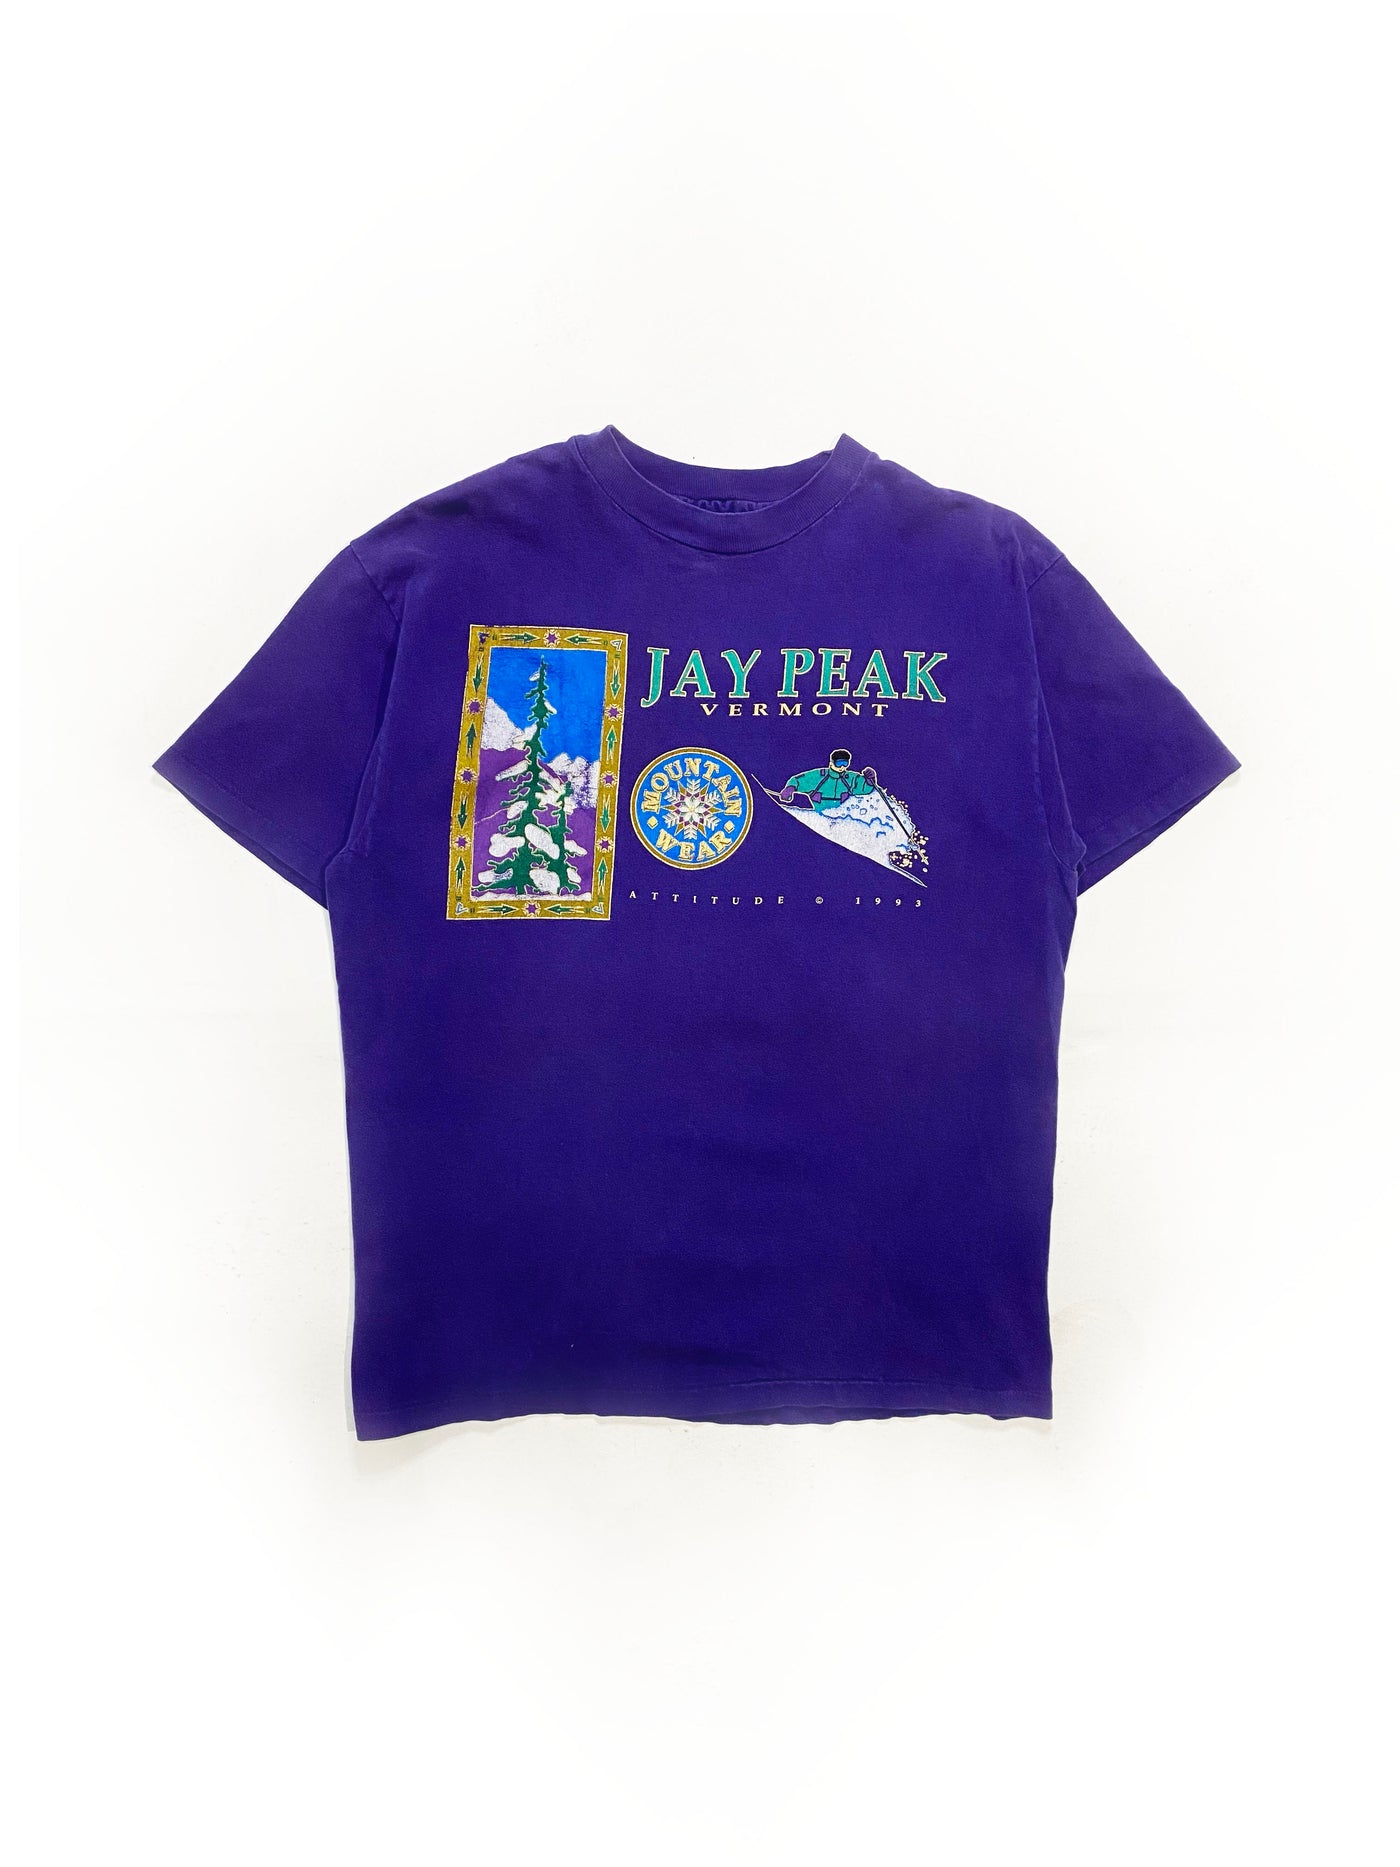 Vintage 1993 Jay Peak Vermont T-Shirt